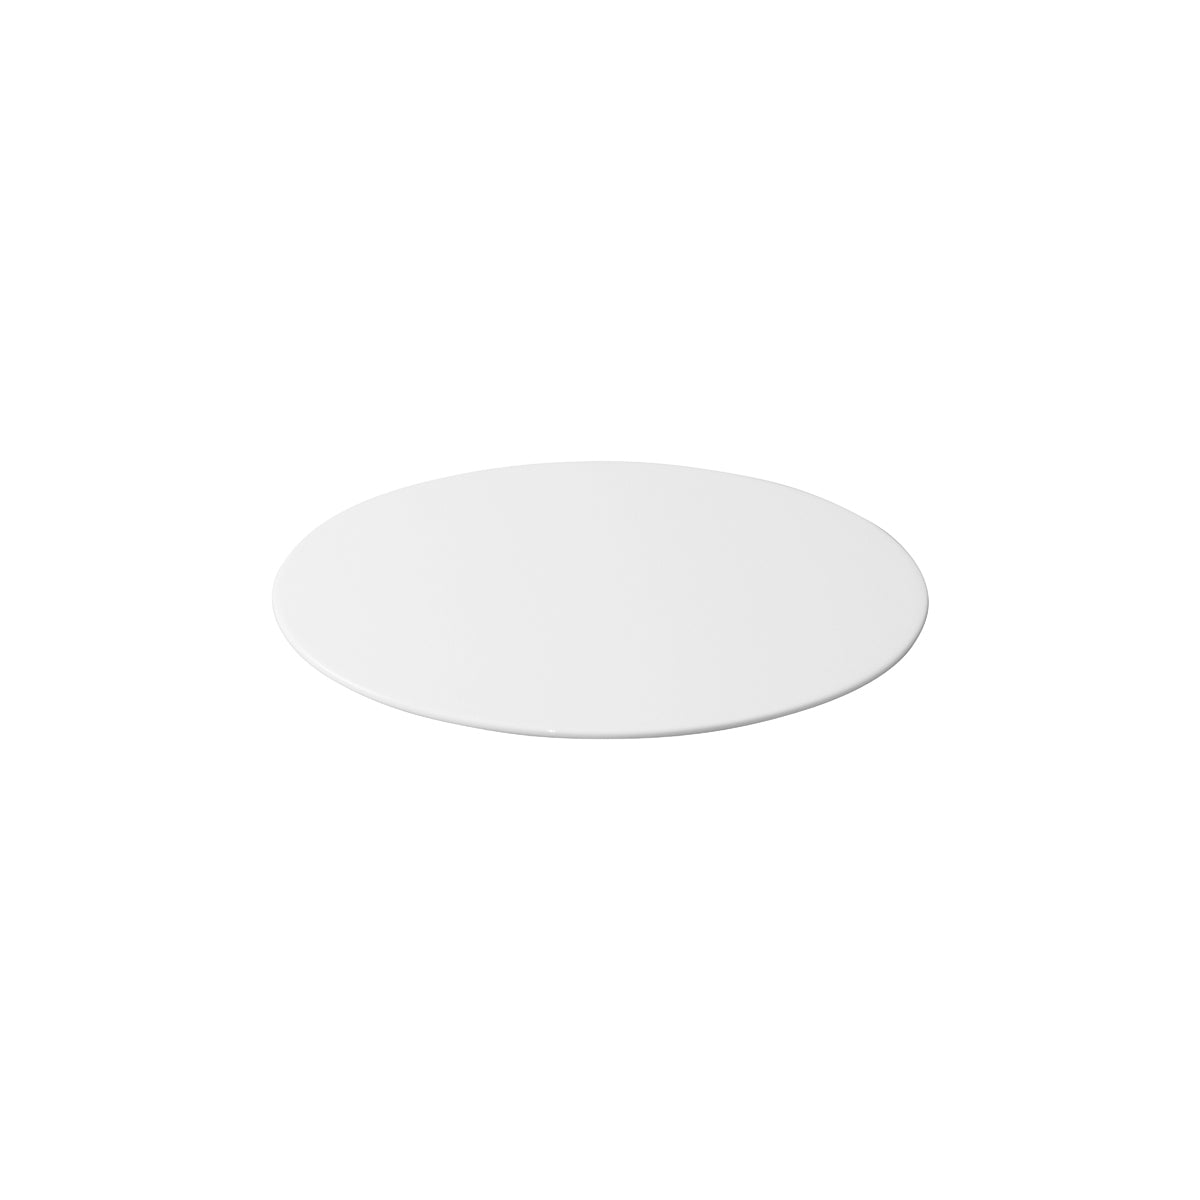 94849 Royal Porcelain White Album Oval Plate Lid Suit (U3220L) Tomkin Australia Hospitality Supplies